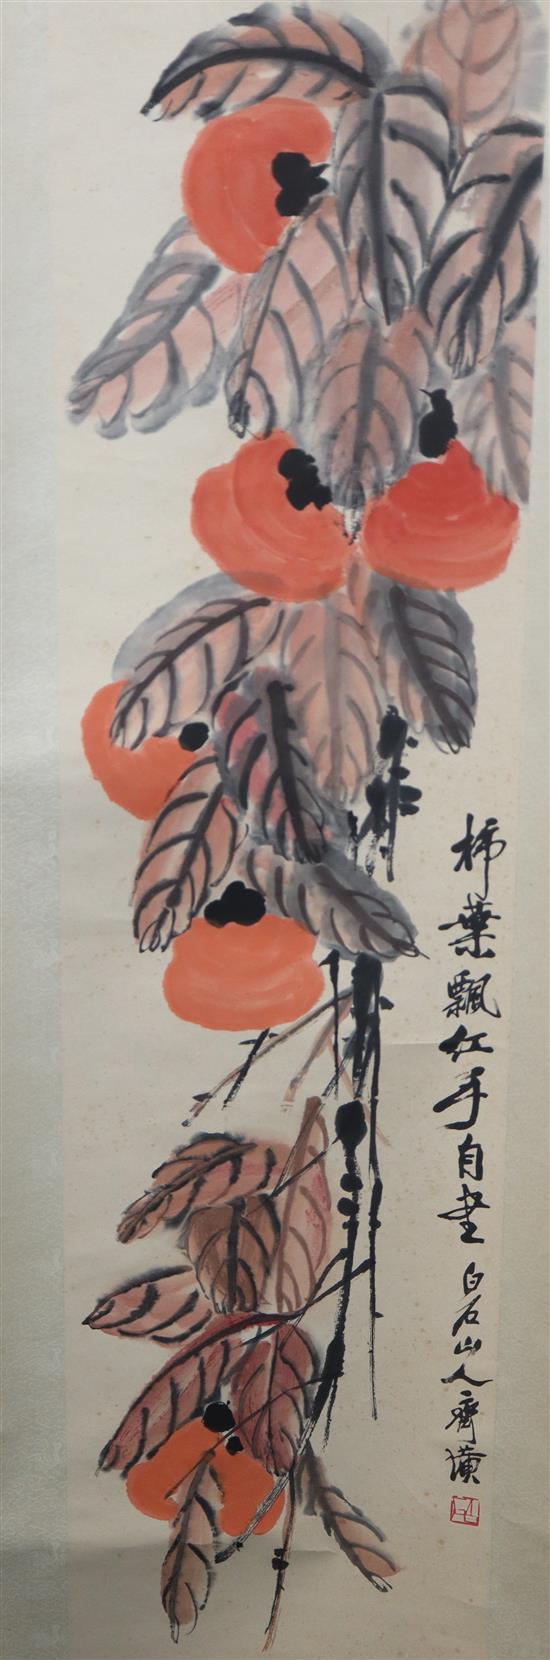 After Qi Baishi, printed scroll